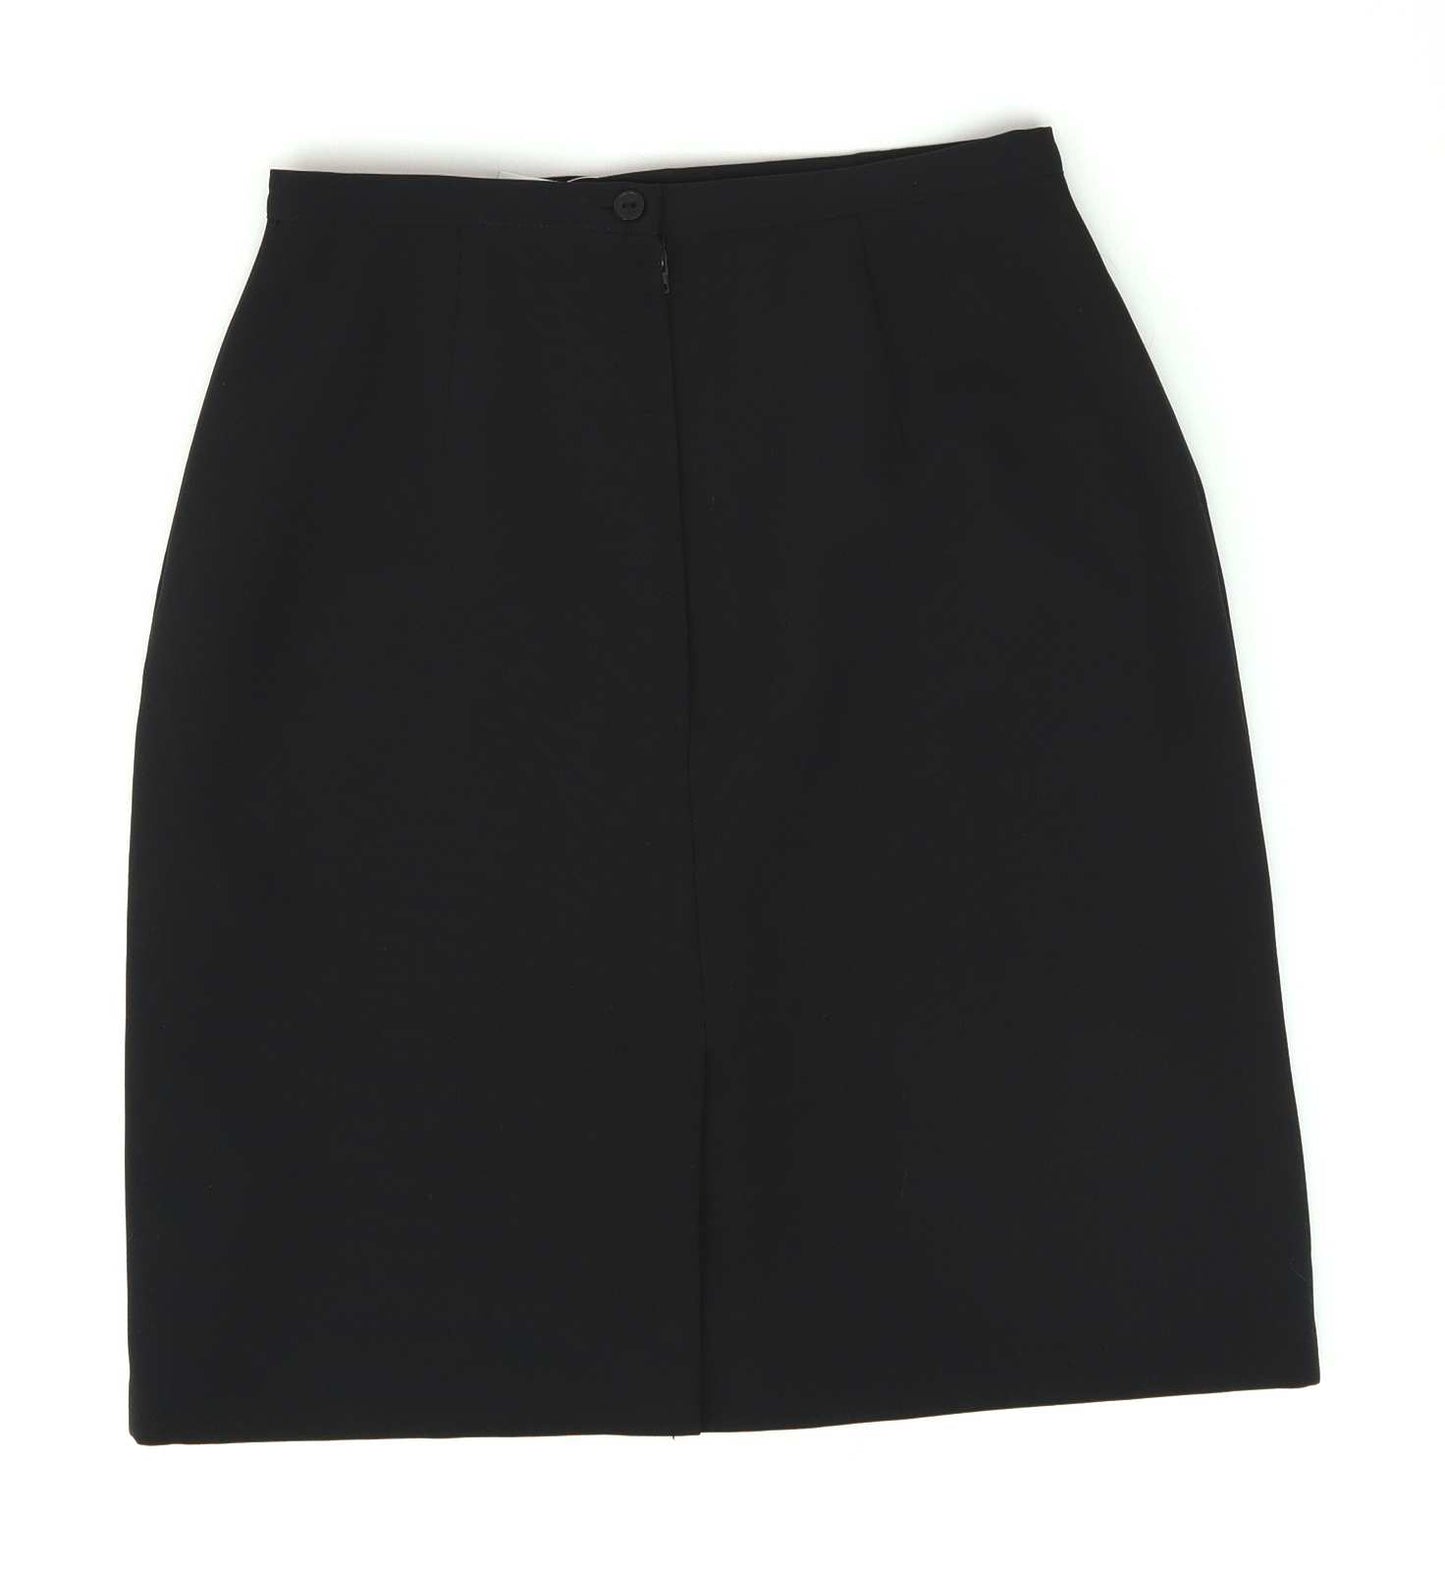 New Look Womens Size 10 Black Skirt (Regular)